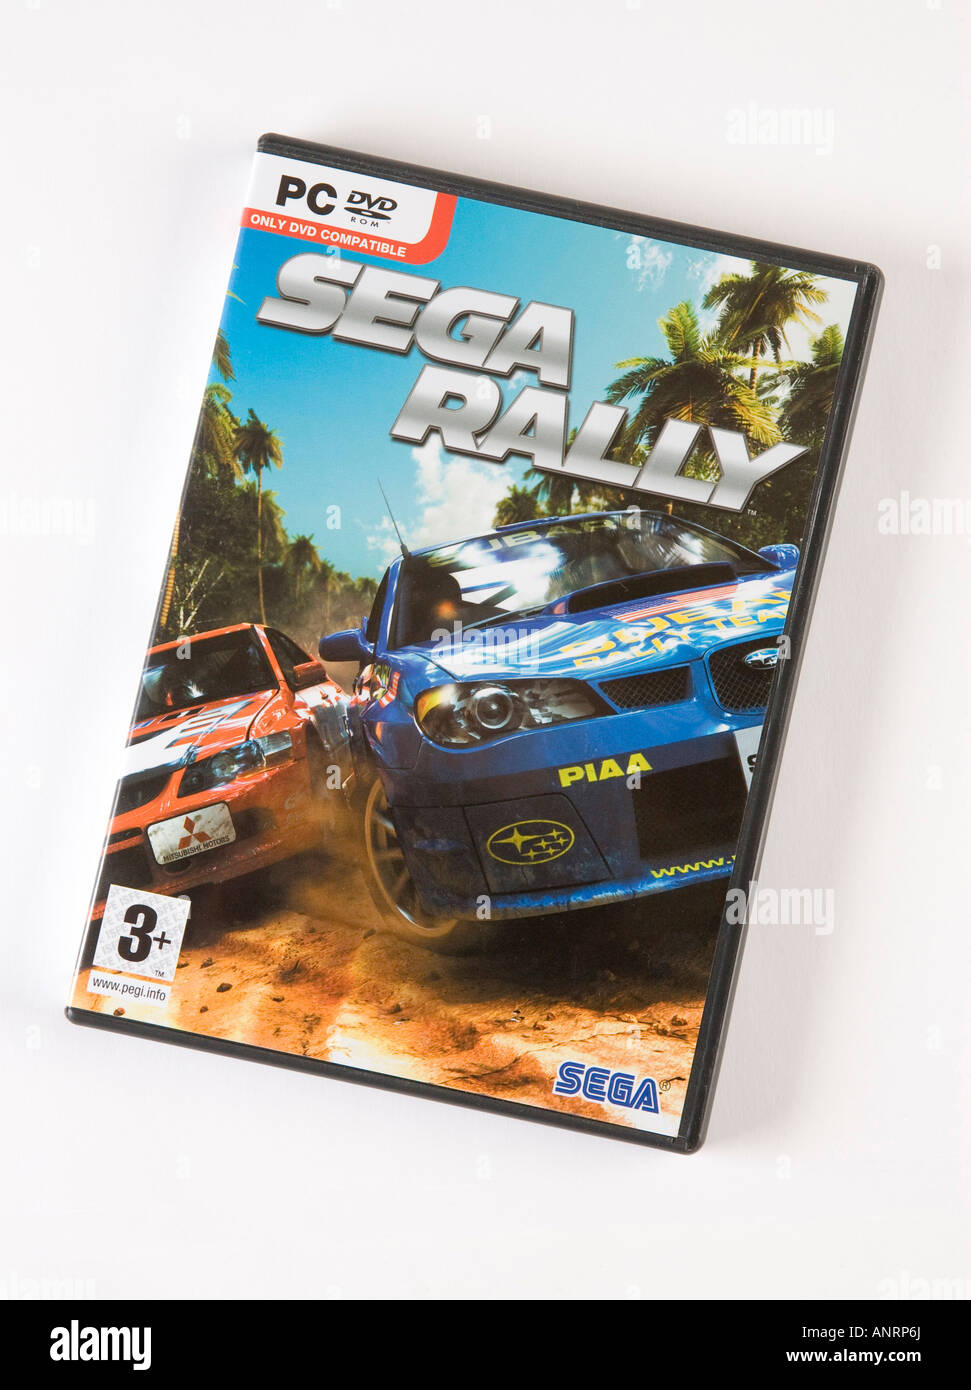 Sega Rally computer game DVD Stock Photo - Alamy